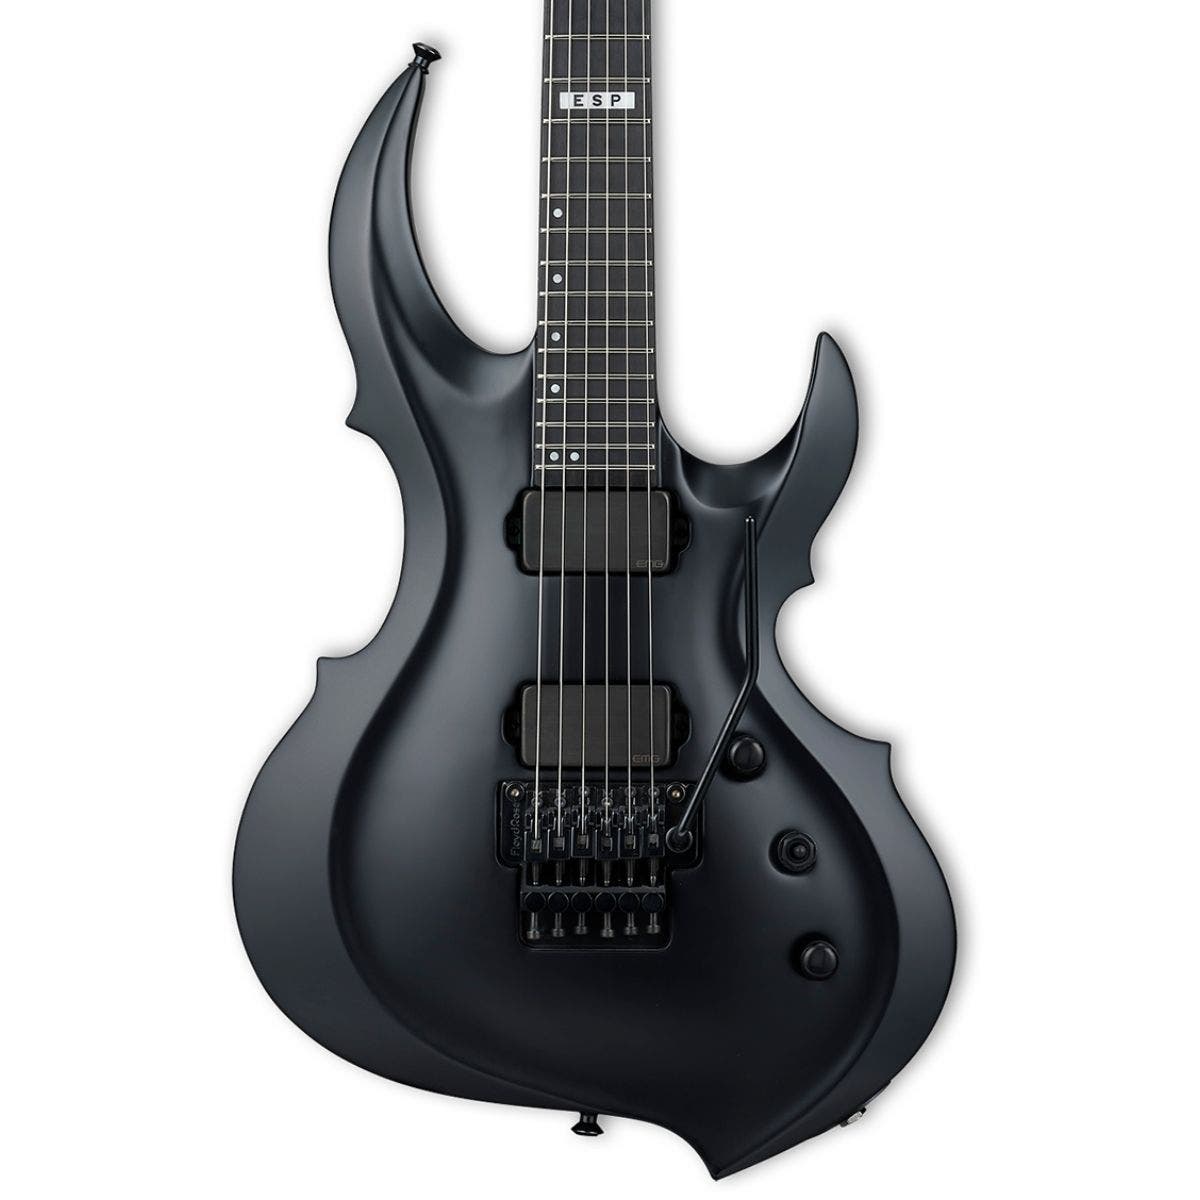 ESP E-II FRX Electric Guitar - Black Satin [Made in Japan]